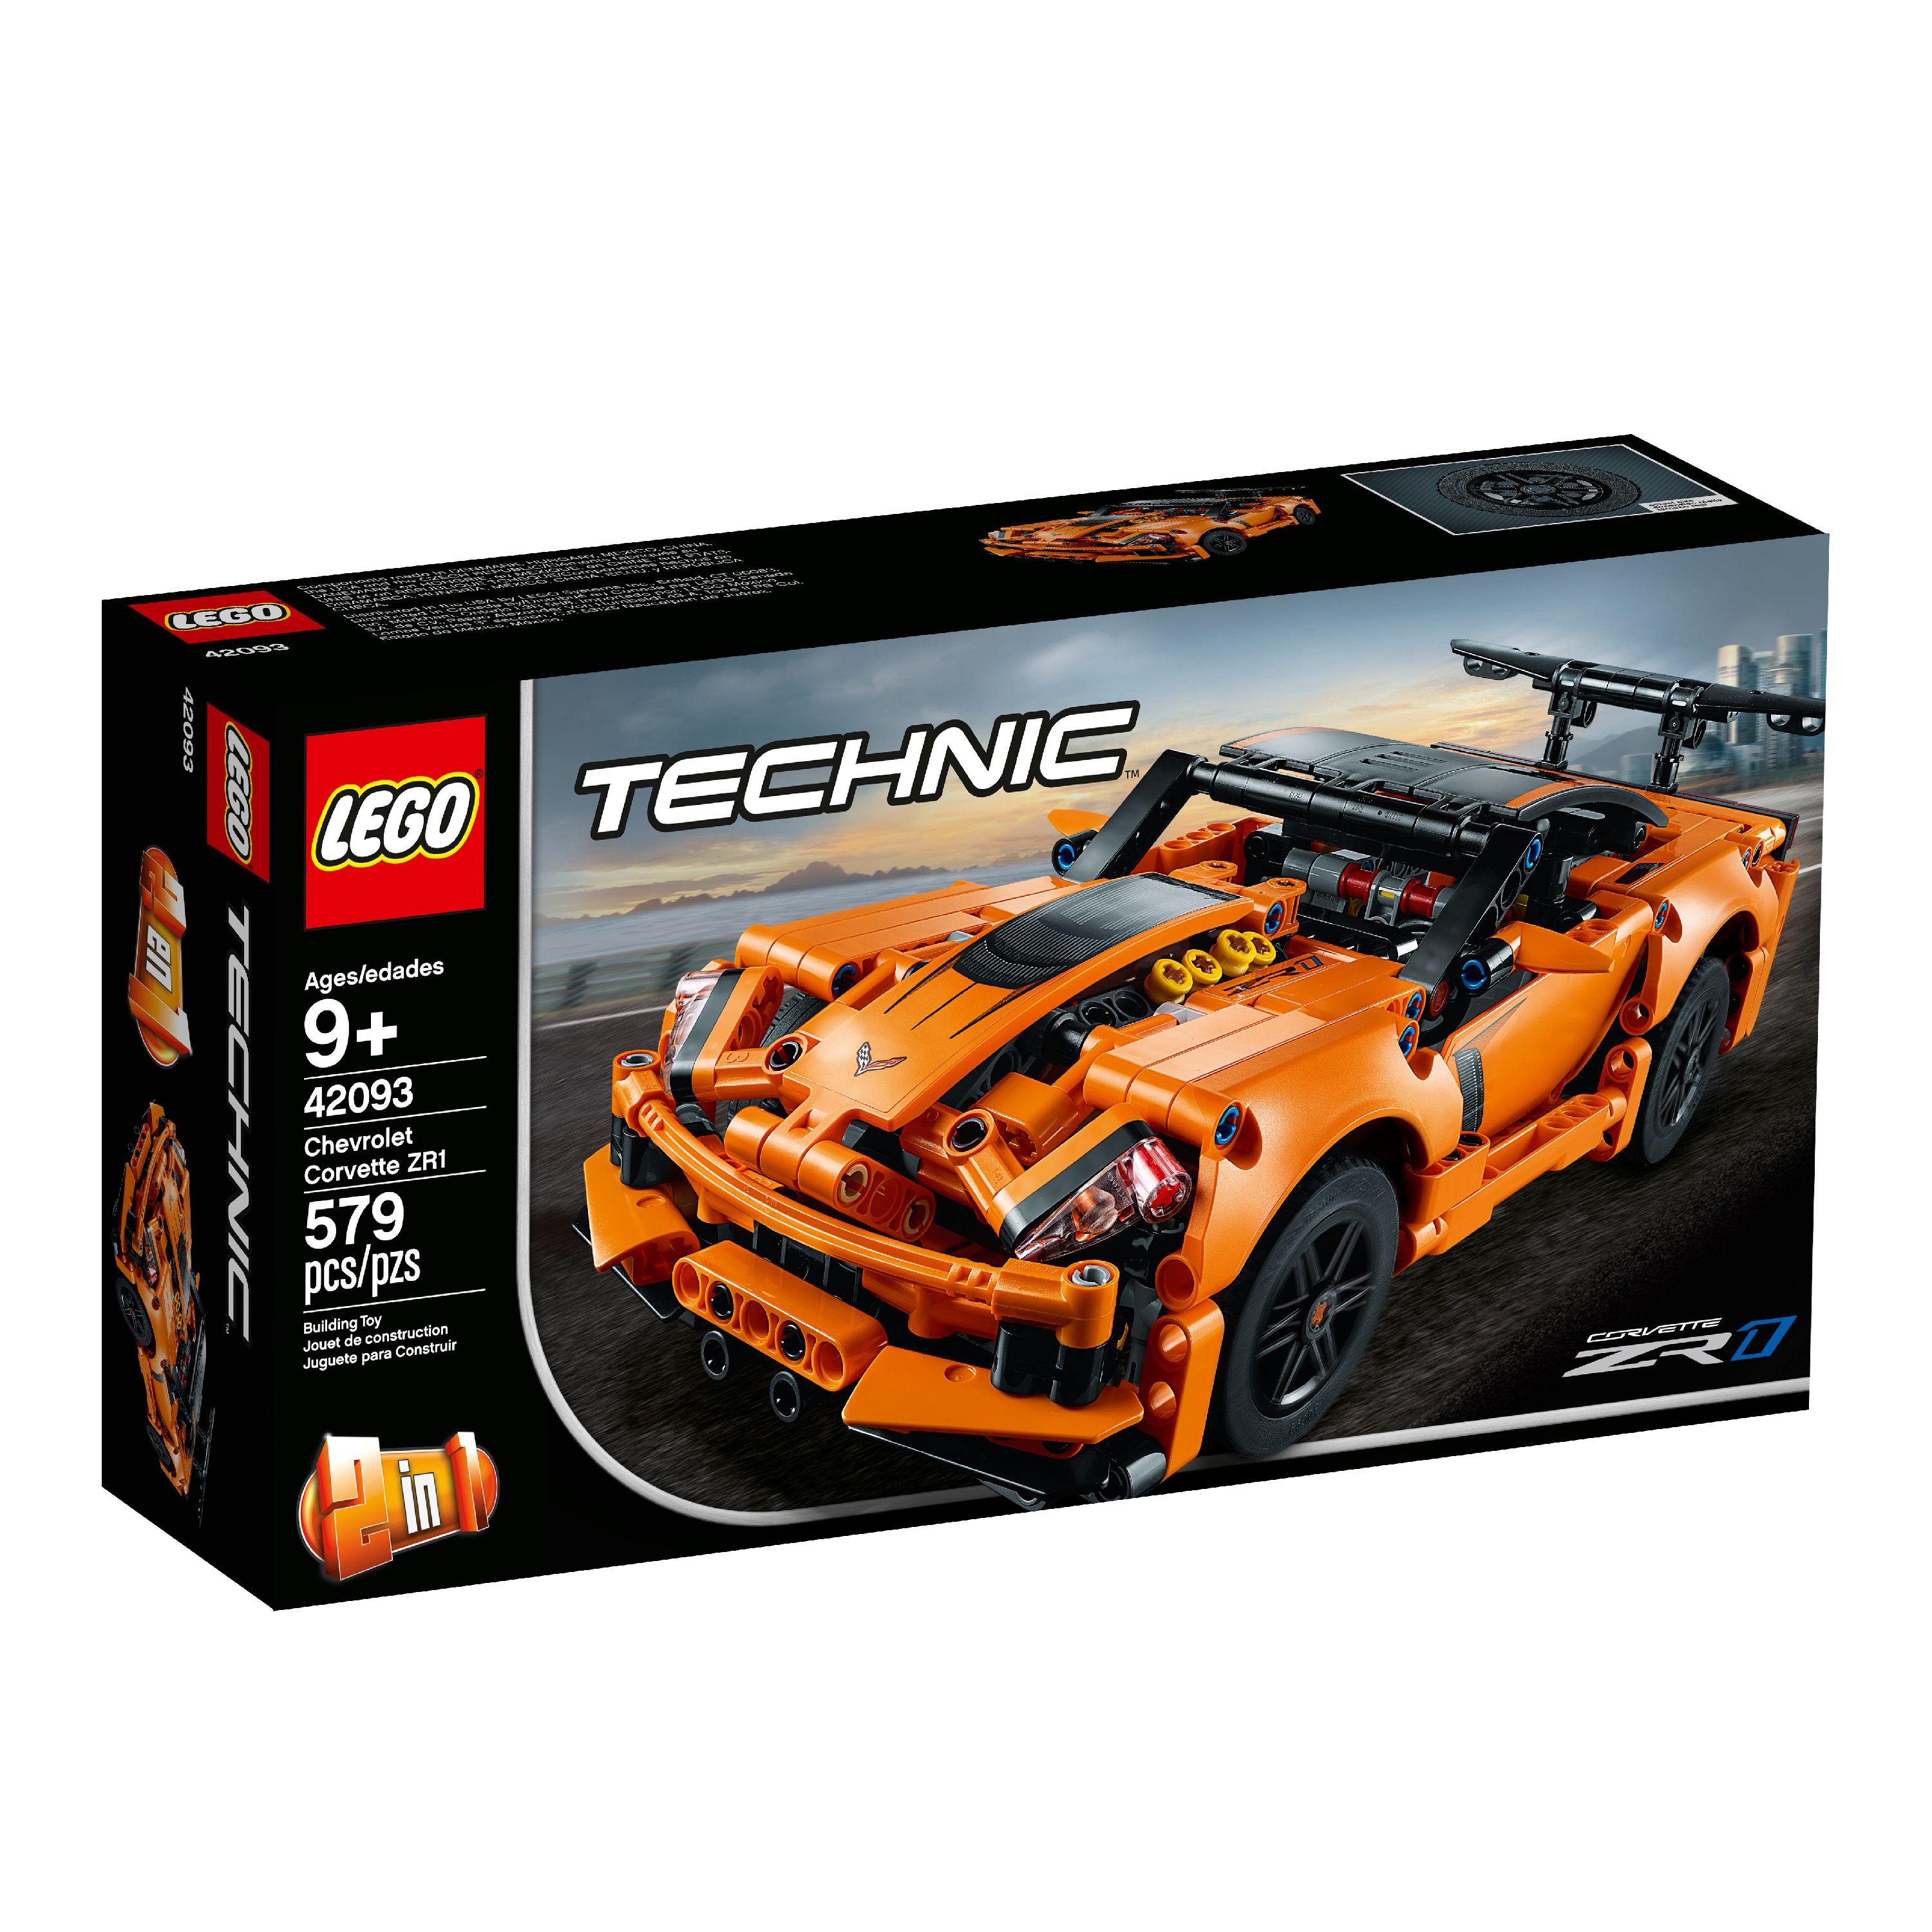 LEGO Technic Chevrolet Corvette ZR1 42093 Model Car Building Set - image 5 of 8